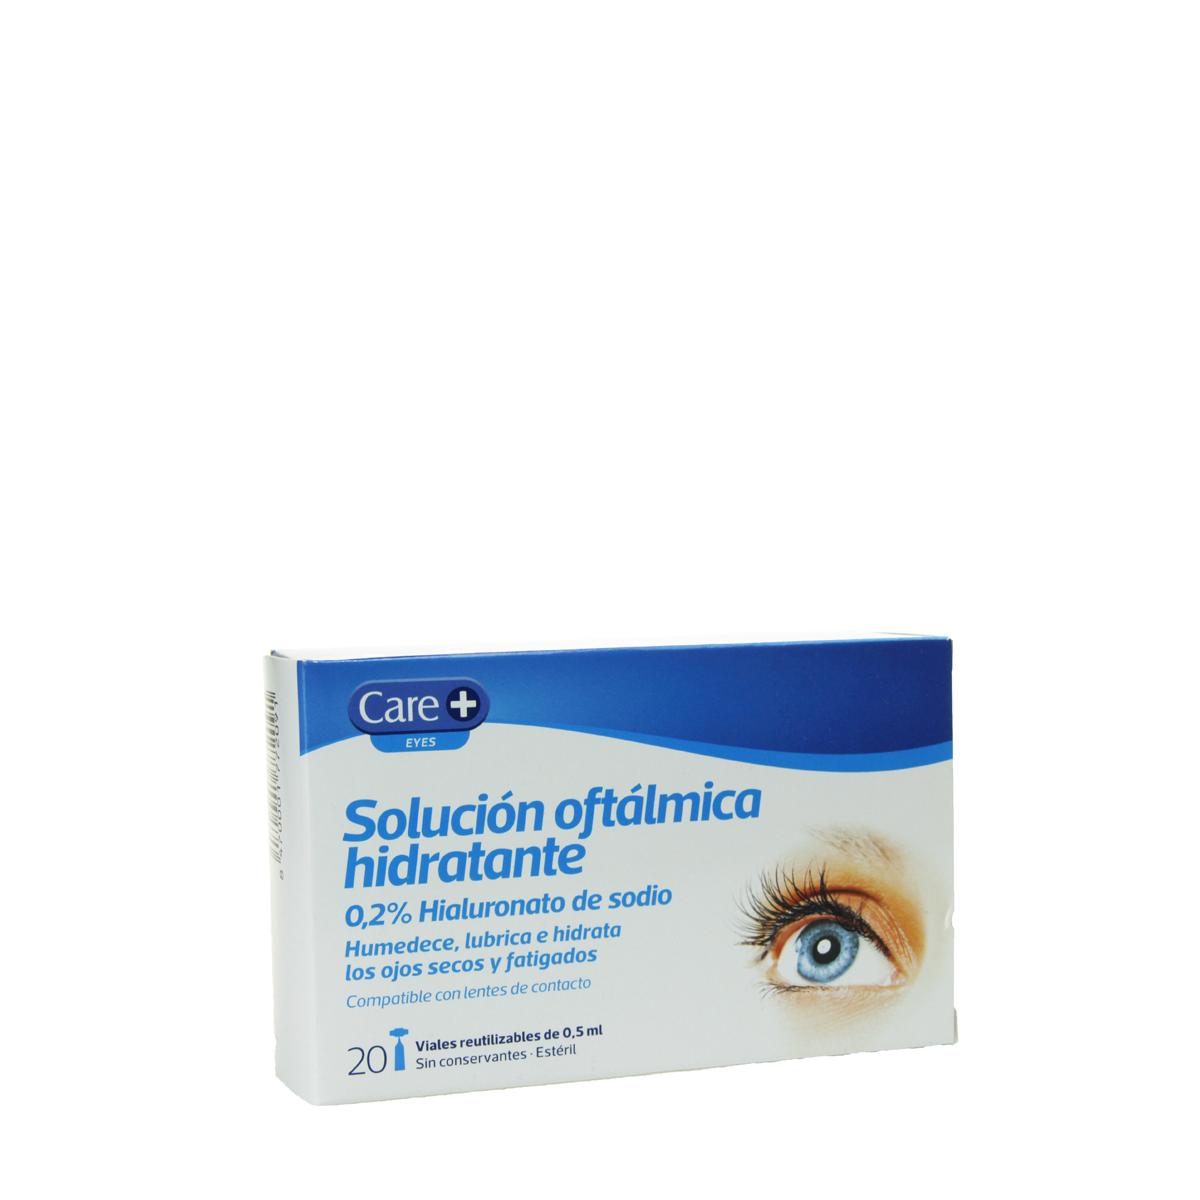 Care+ - Care+ solución oftalmológica 0.2% hialuronato de sodio 20 viales de 0.5 ml